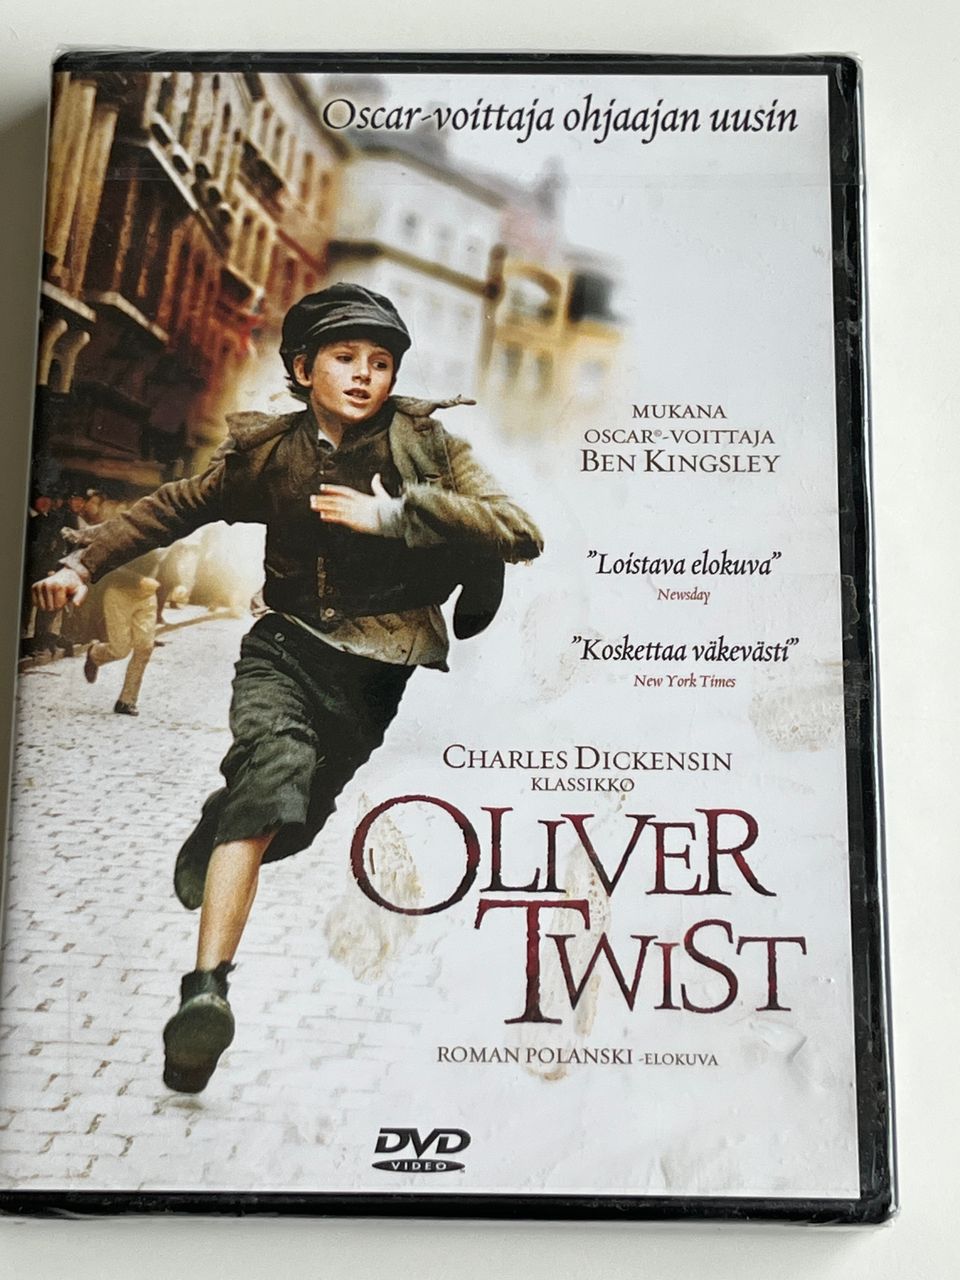 Oliver Twist Roman Polanski elokuva. Charles Dickensin.